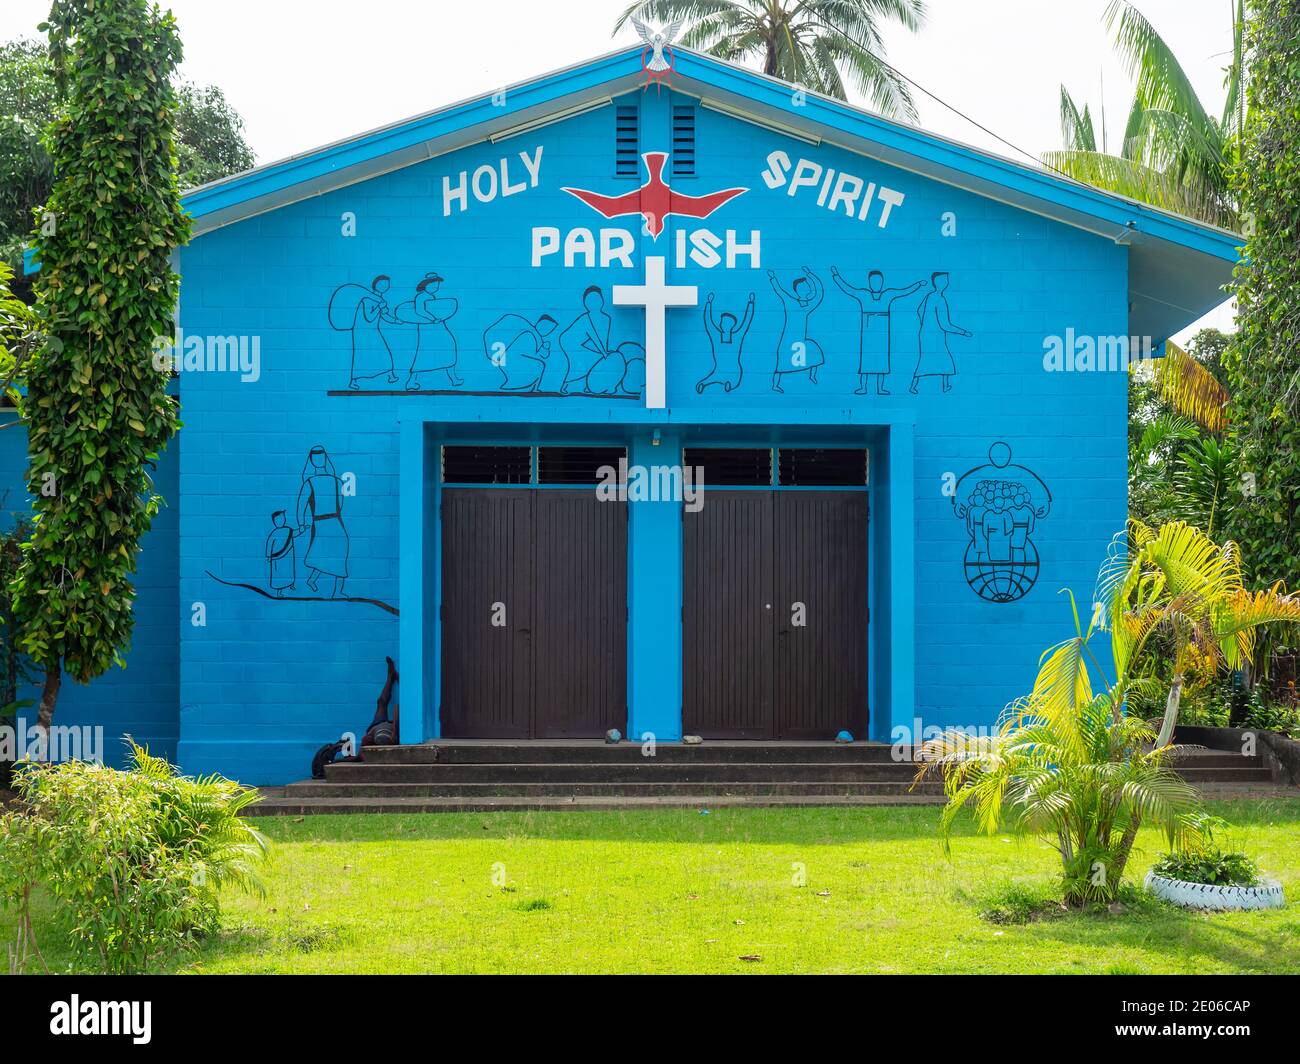 Holy Spirit Parish, a Catholic church in Wewak, the capital of the East Sepik province of Papua New Guinea. Stock Photo